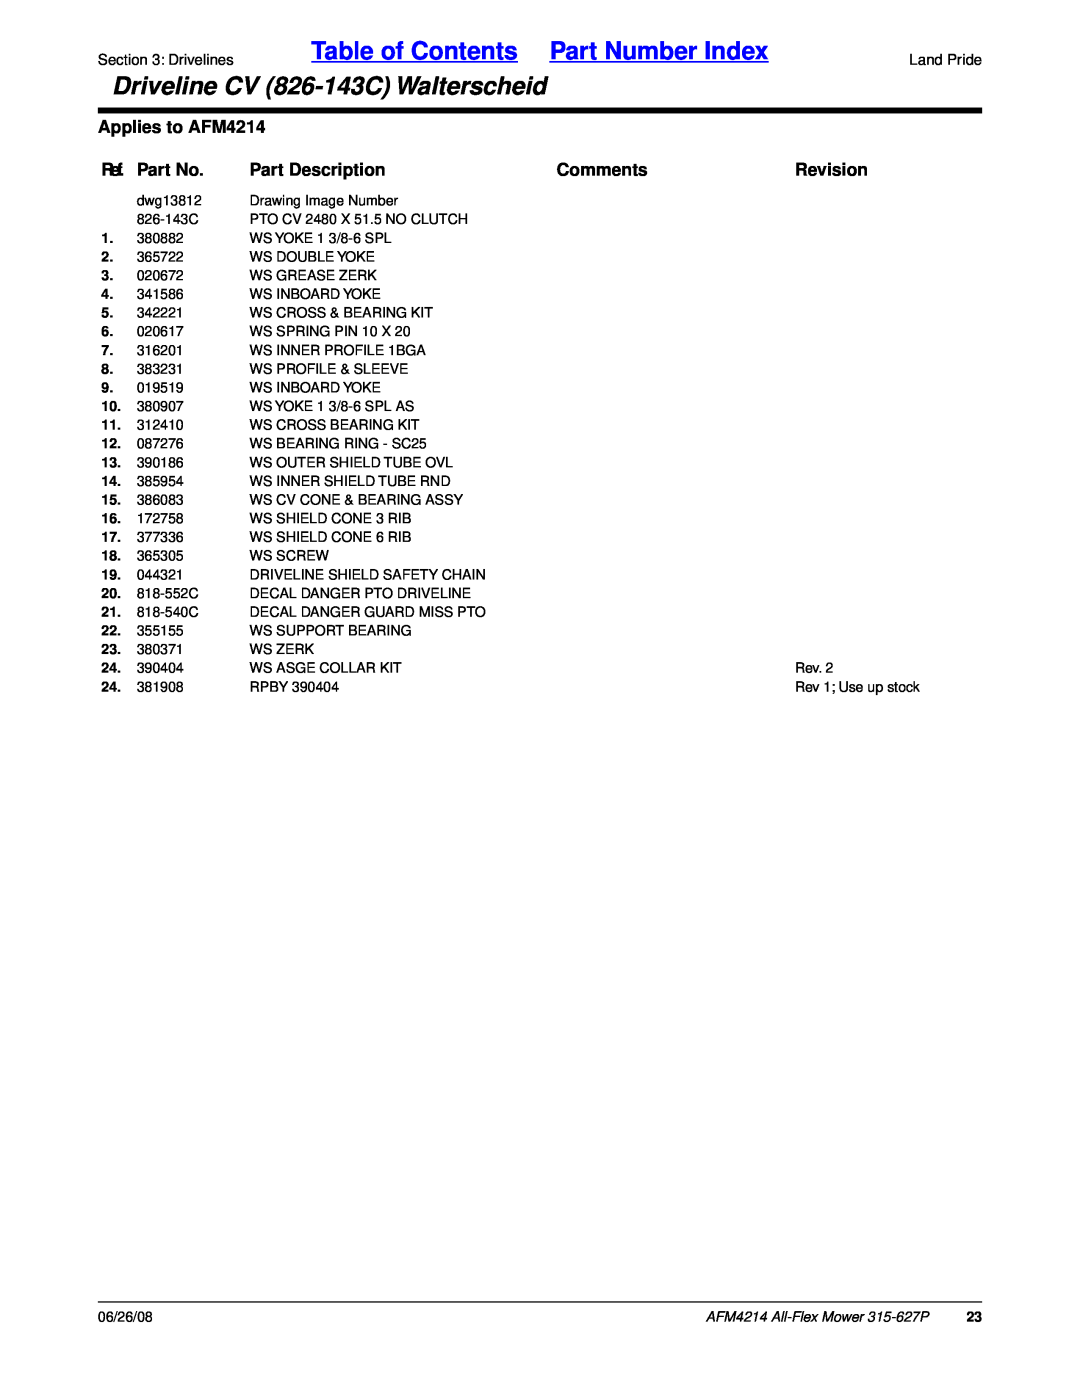 Land Pride Table of Contents Part Number Index, Driveline CV 826-143CWalterscheid, Applies to AFM4214, Ref. Part No 